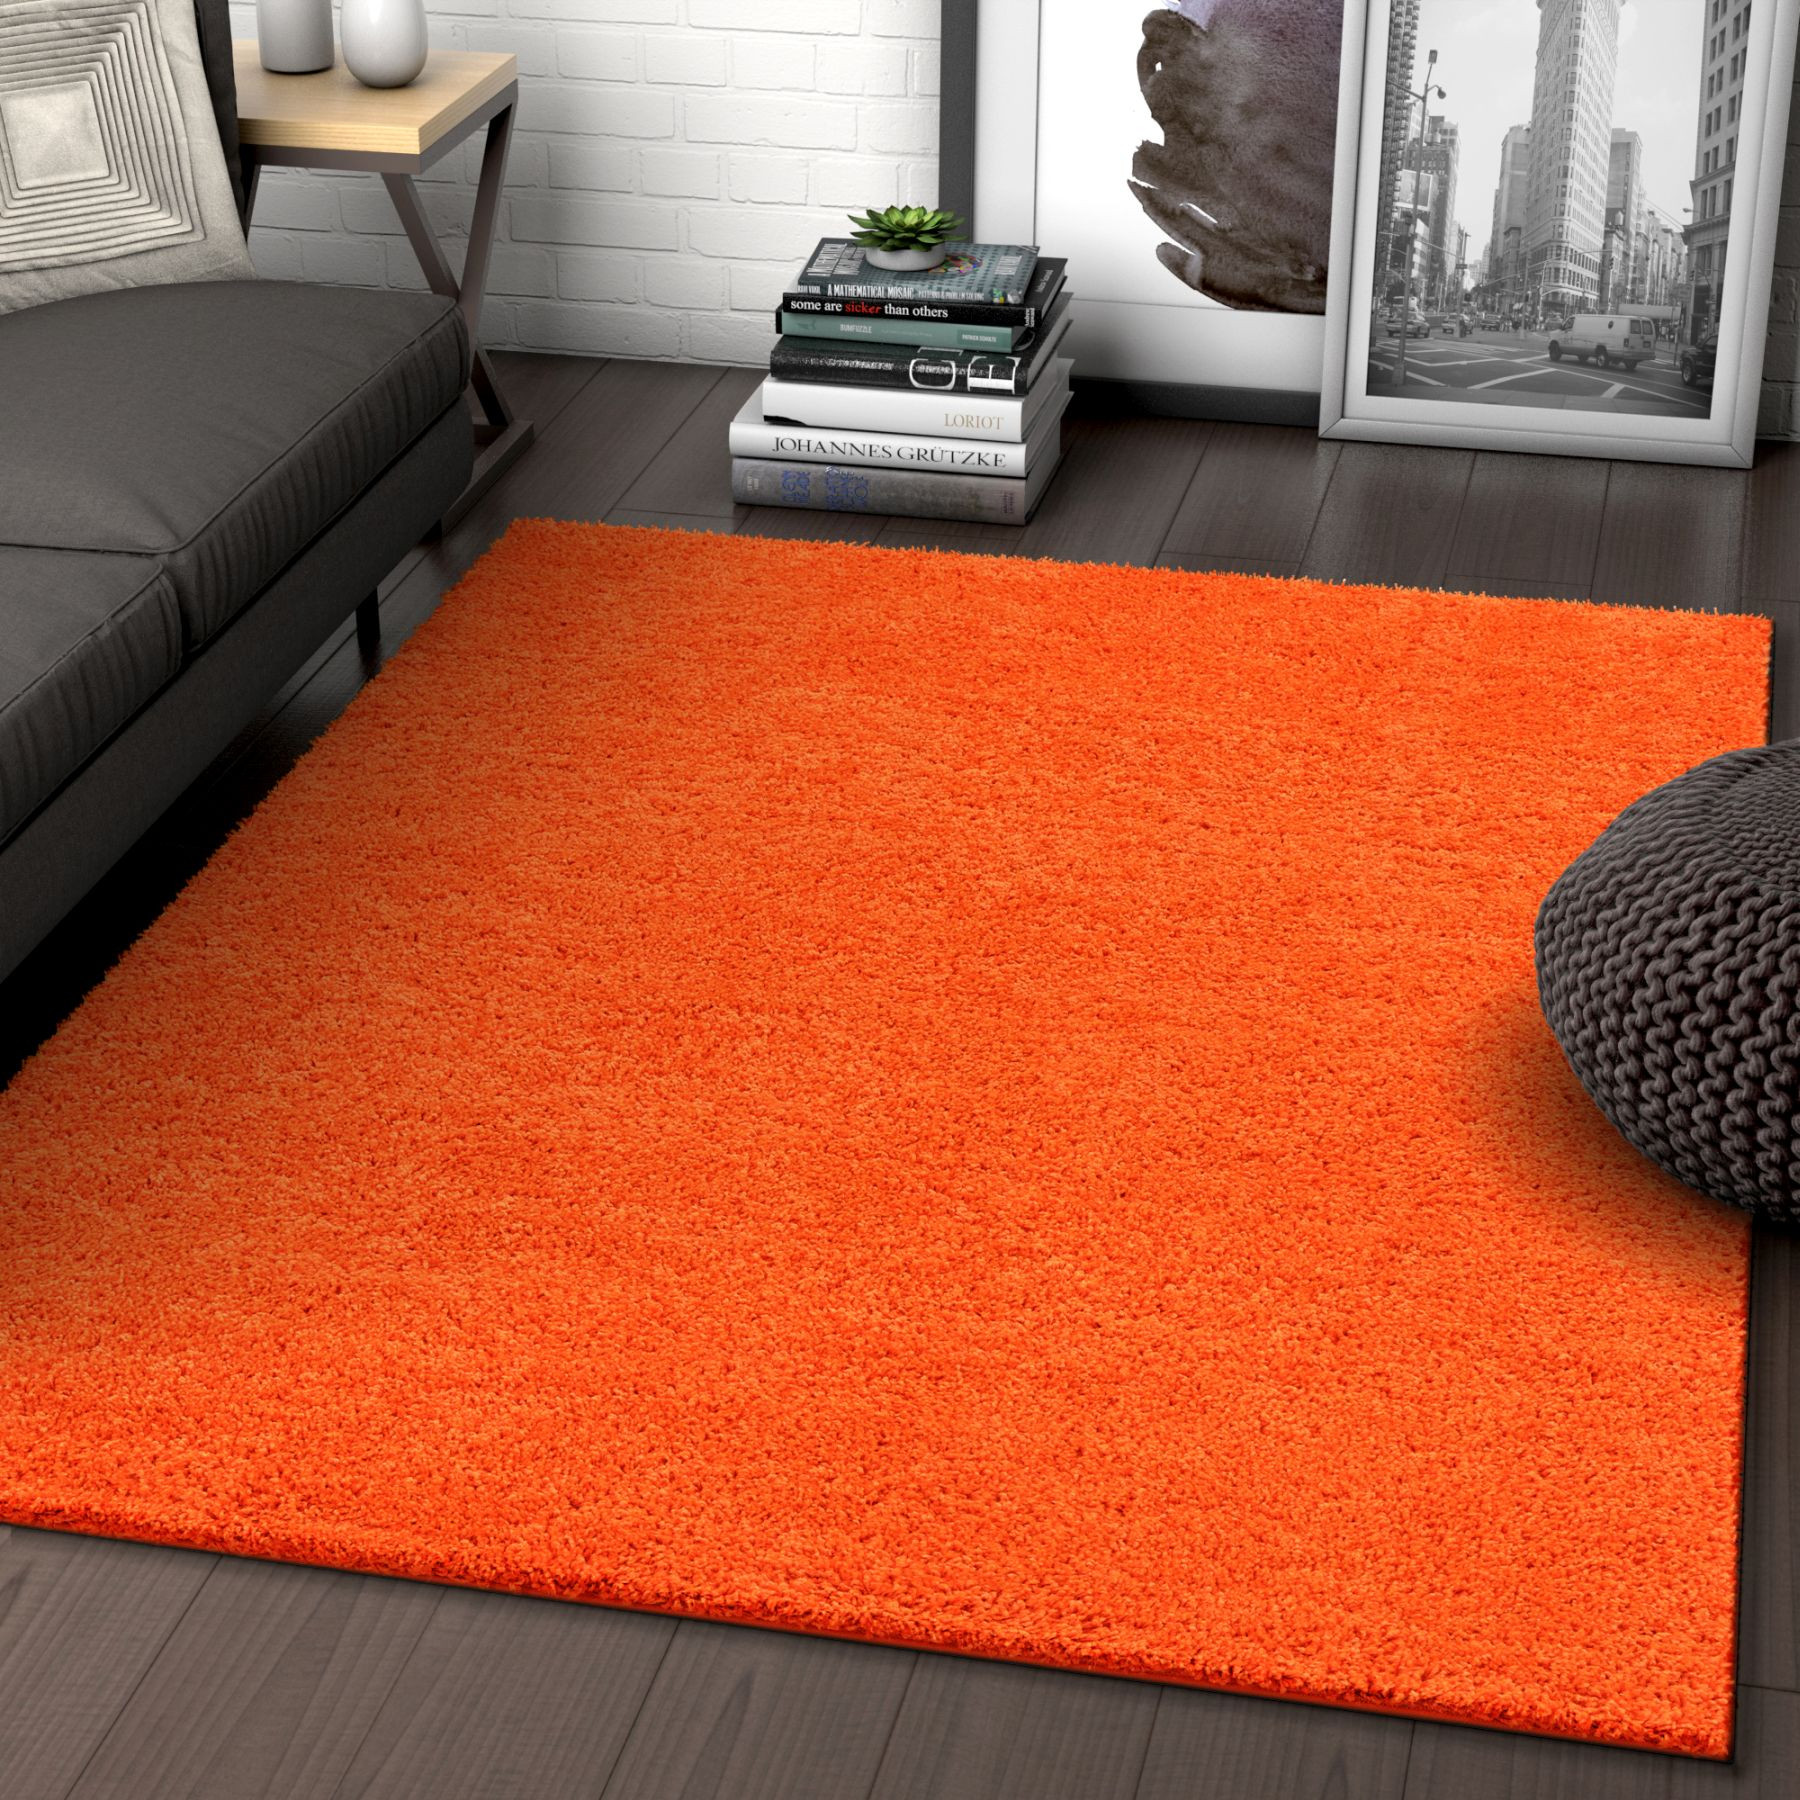 Orange Rugs For Living Room
 Solid Retro Modern Orange Shag 5x7 5 x 7 2 Area Rug